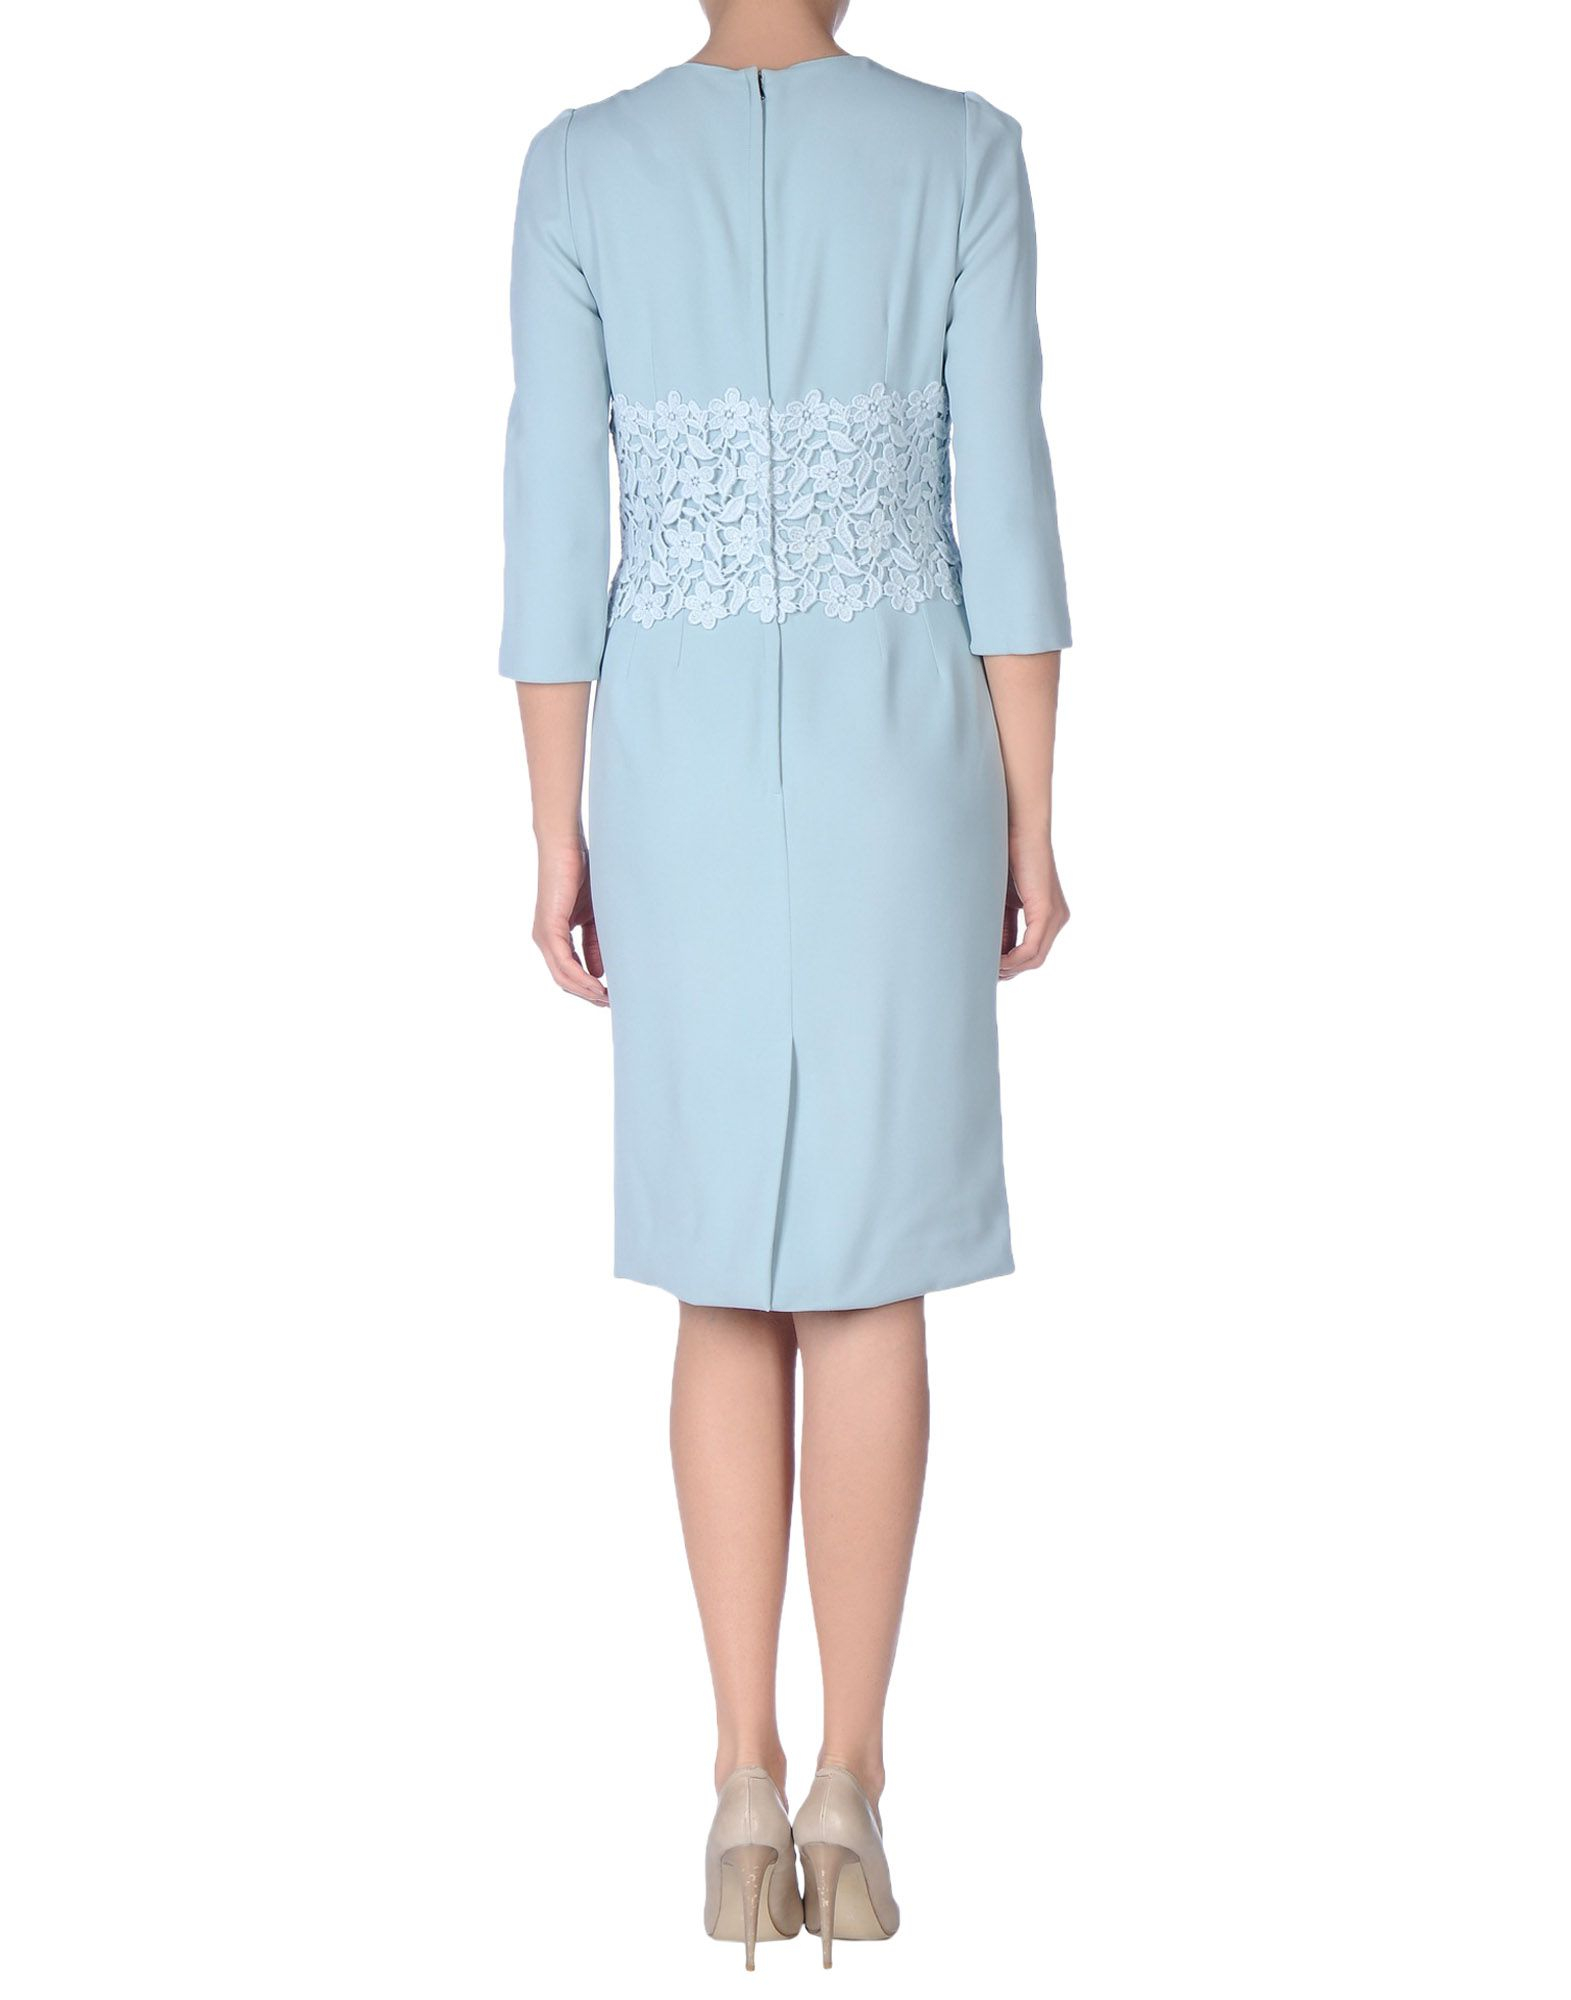 Dolce & gabbana Knee-length Dress in Blue (Sky blue) | Lyst